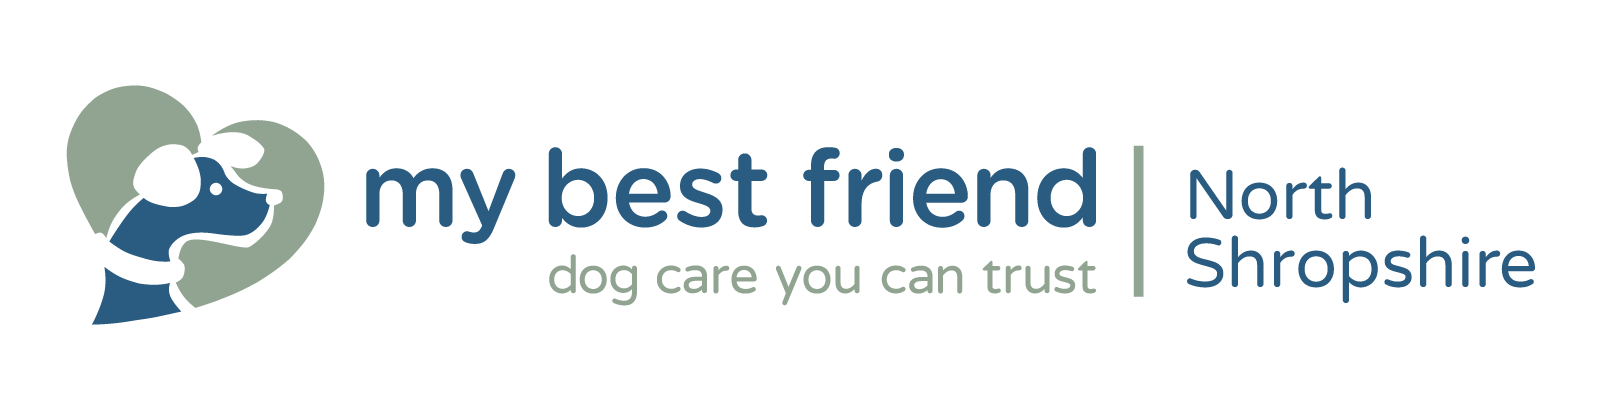 My Best Friend Dog Care North Shropshire